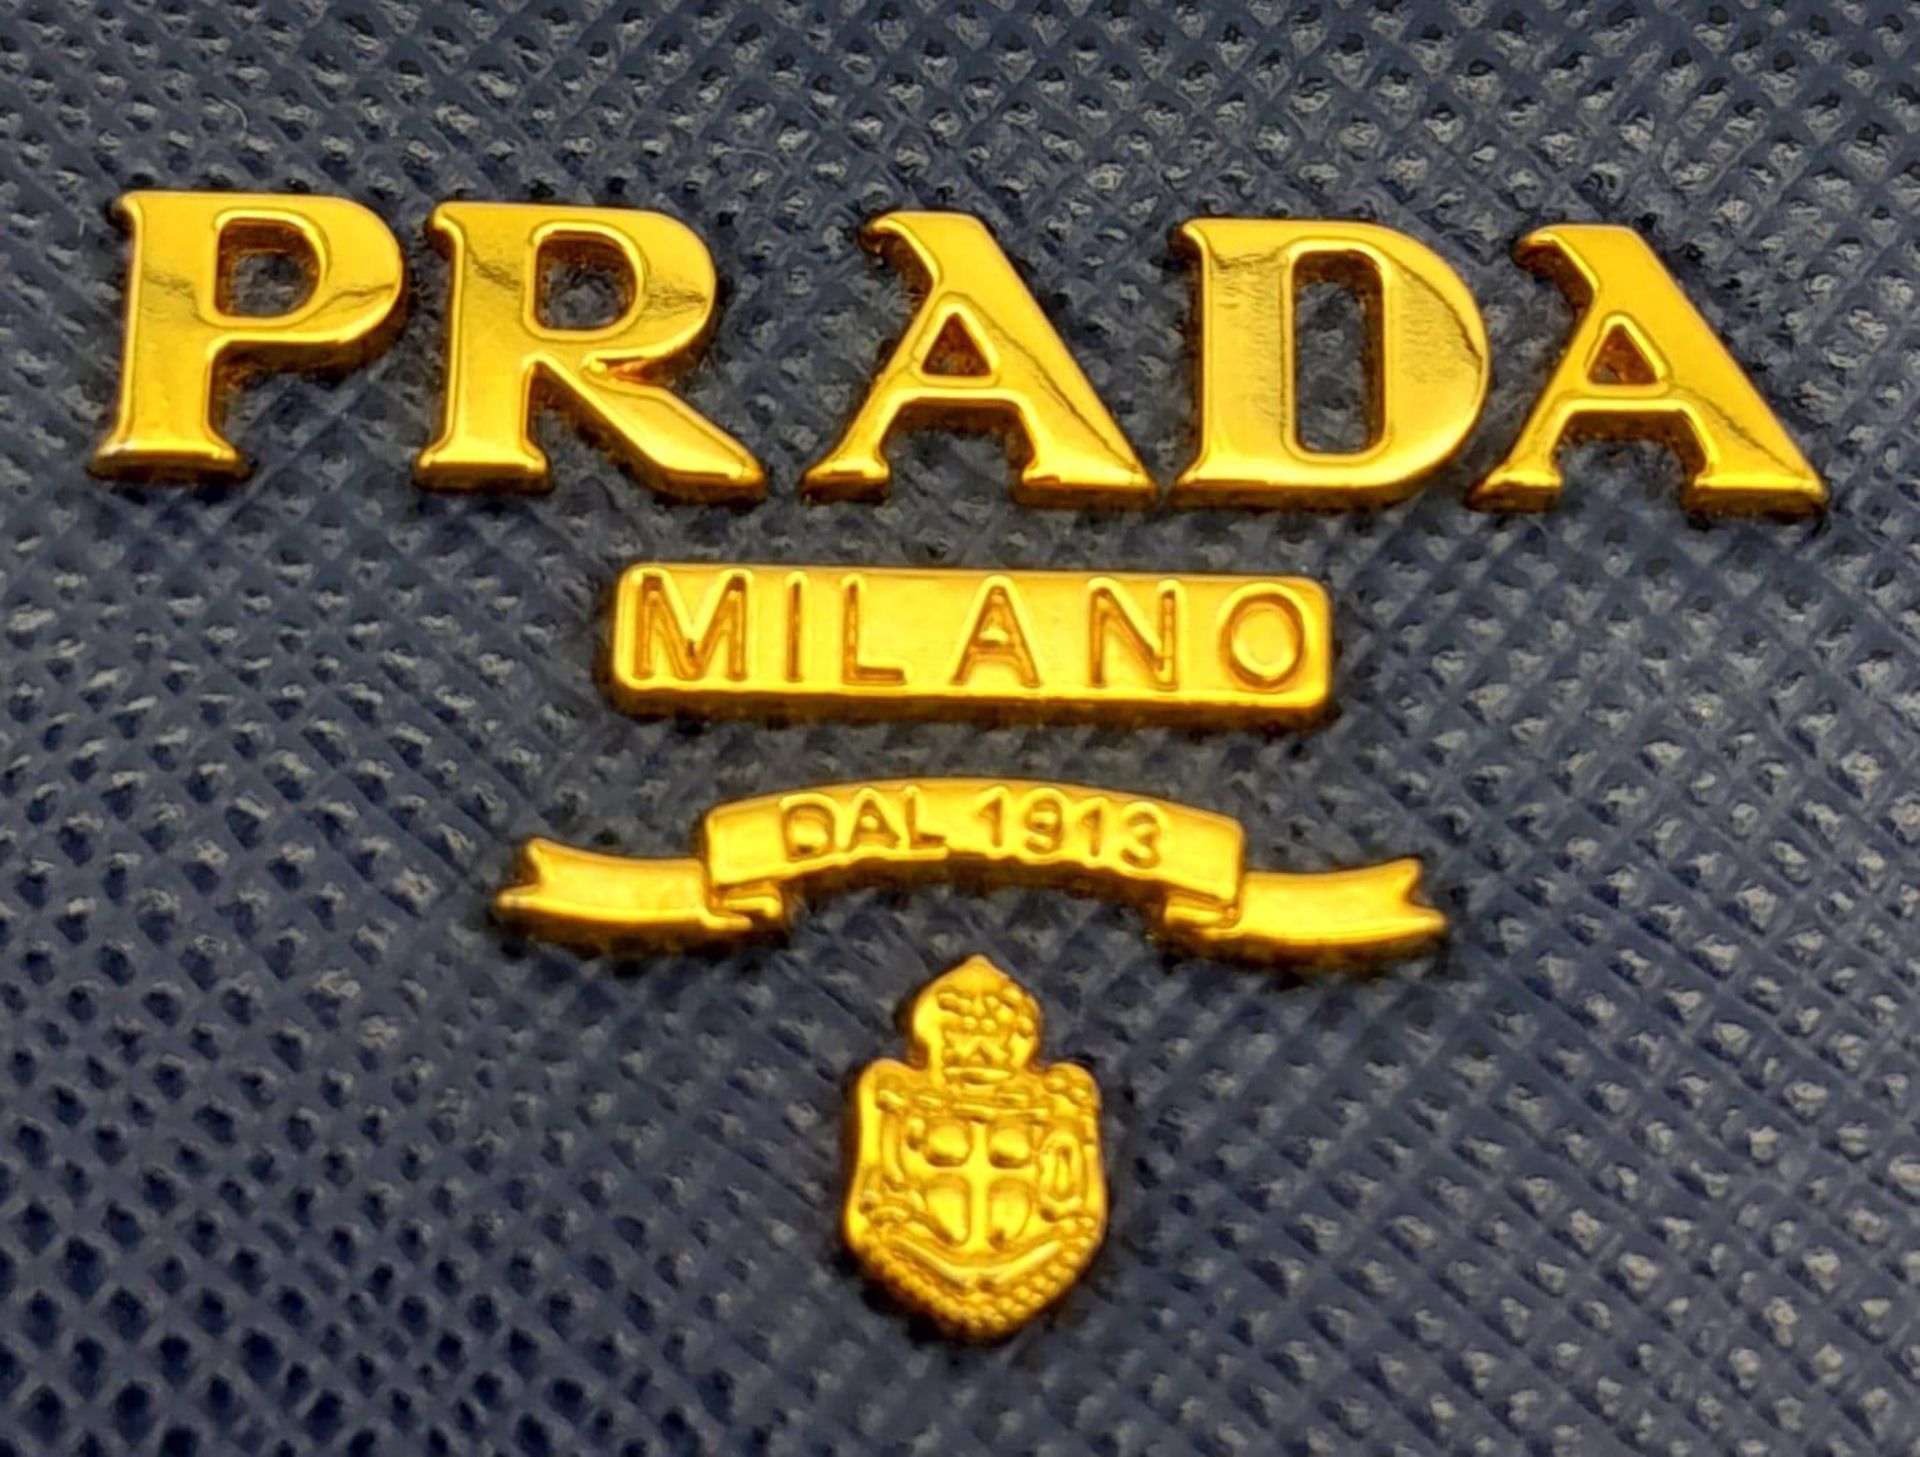 A Prada Royal Blue Purse/Wallet. Saffiano leather exterior, with the Prada logo in gold-toned - Bild 7 aus 7